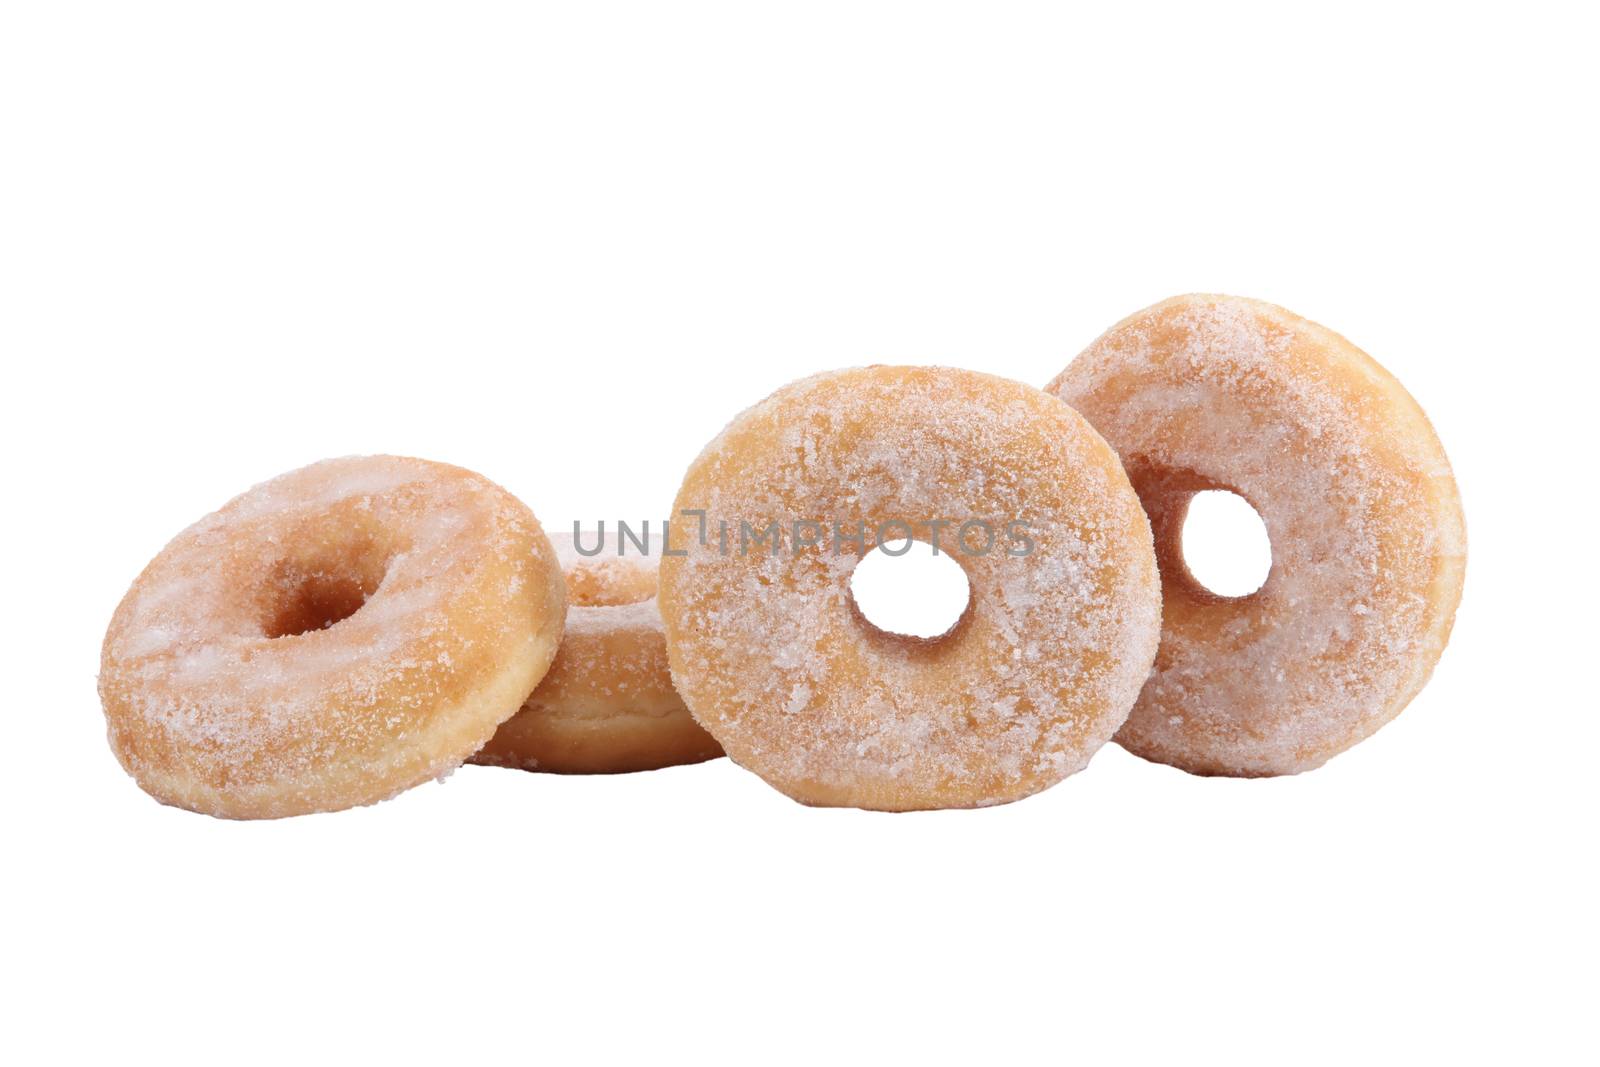 Four sugared dough-nuts